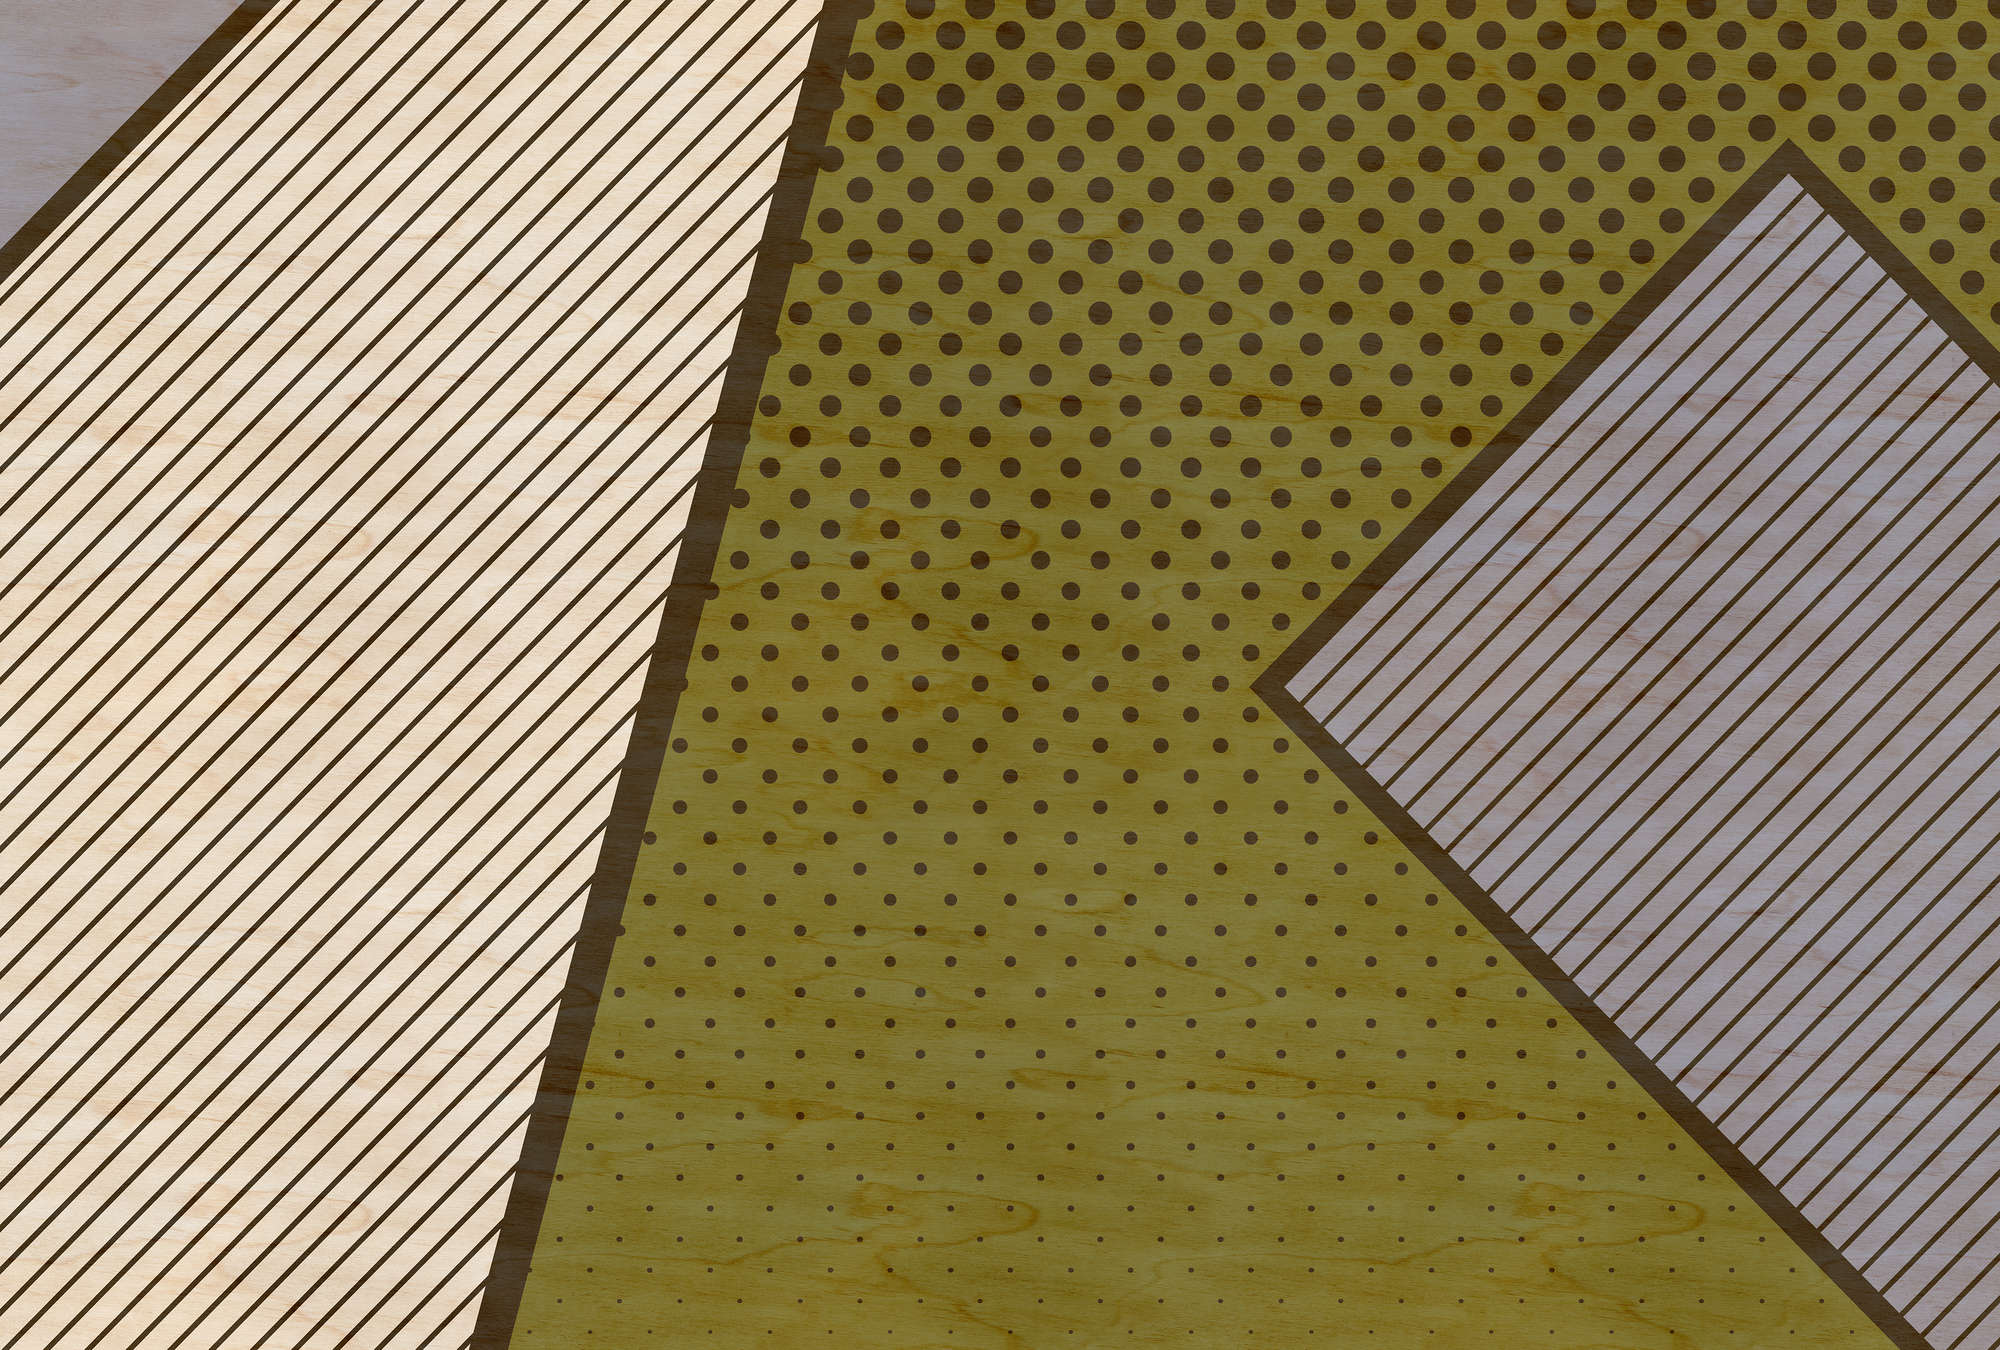             Bird gang 2 - Fototapete, modernes Muster im Pop Art Stil- Sperrholz Struktur – Beige, Gelb | Struktur Vlies
        